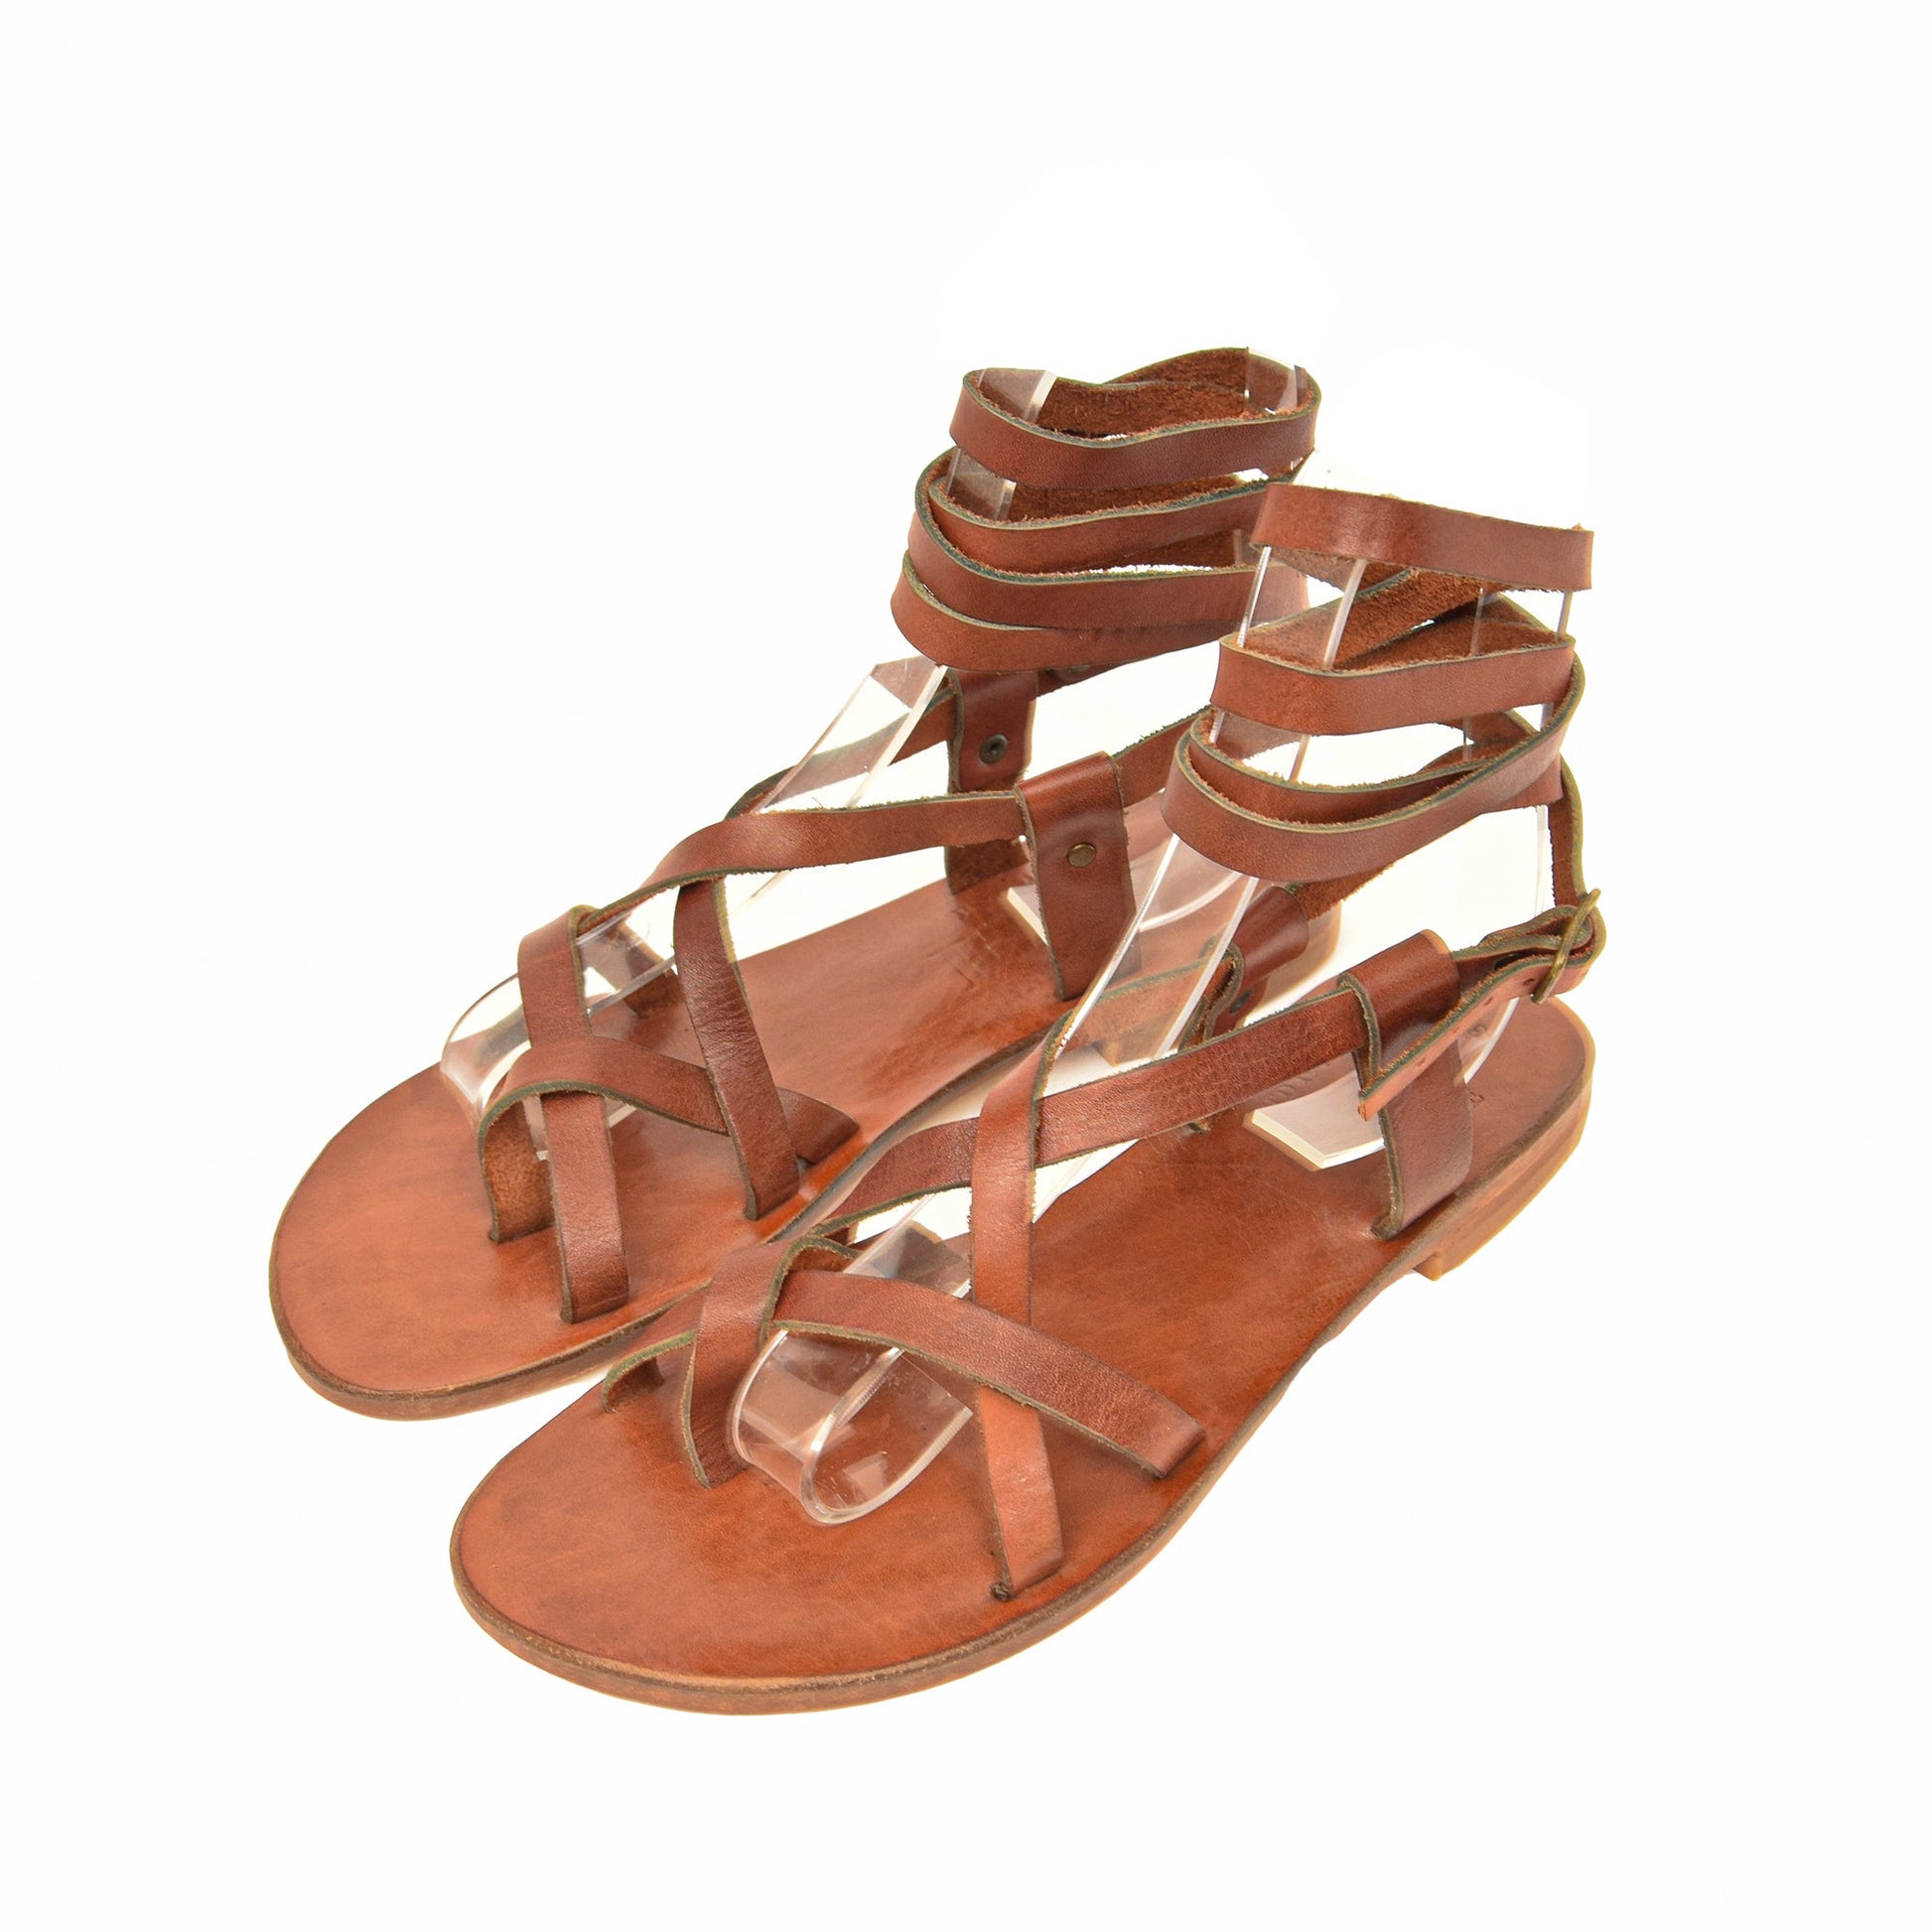 Thetis Chestnut Brown Leather Women’s Sandals - Handmade Flat Sandal, Low Heel Strapped Travel Comfortable Sandal